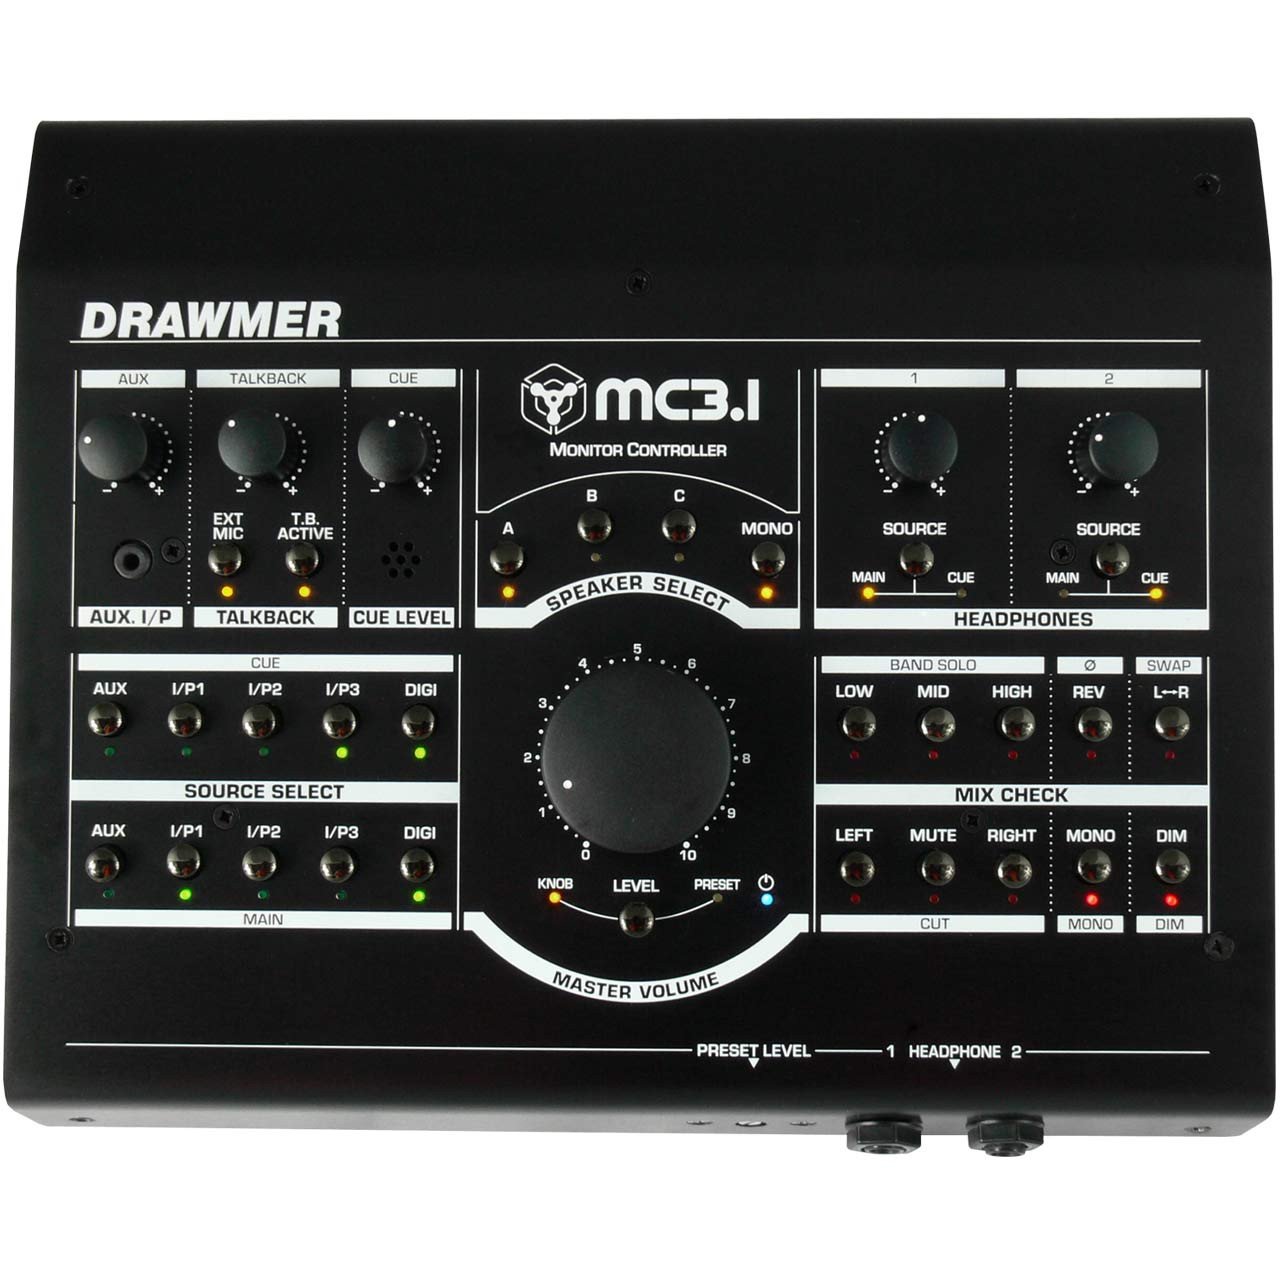 Monitor Controllers - Drawmer MC3.1 Monitor Controller